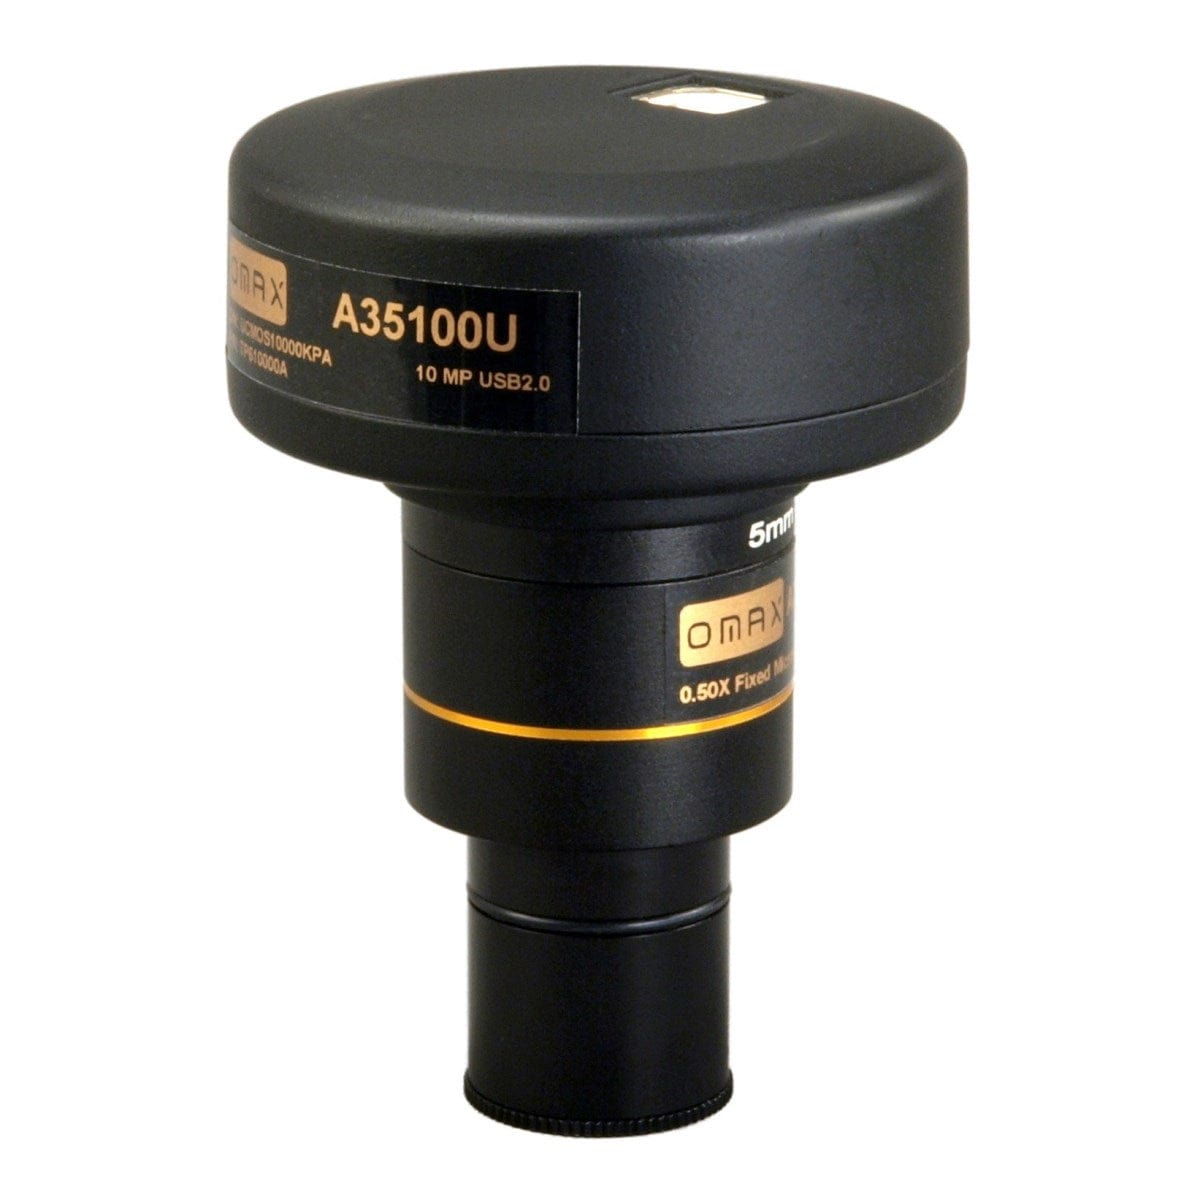 Microscope USB TOOLCRAFT 2 Mill. pixel Grossissement numérique (max.): 200 x